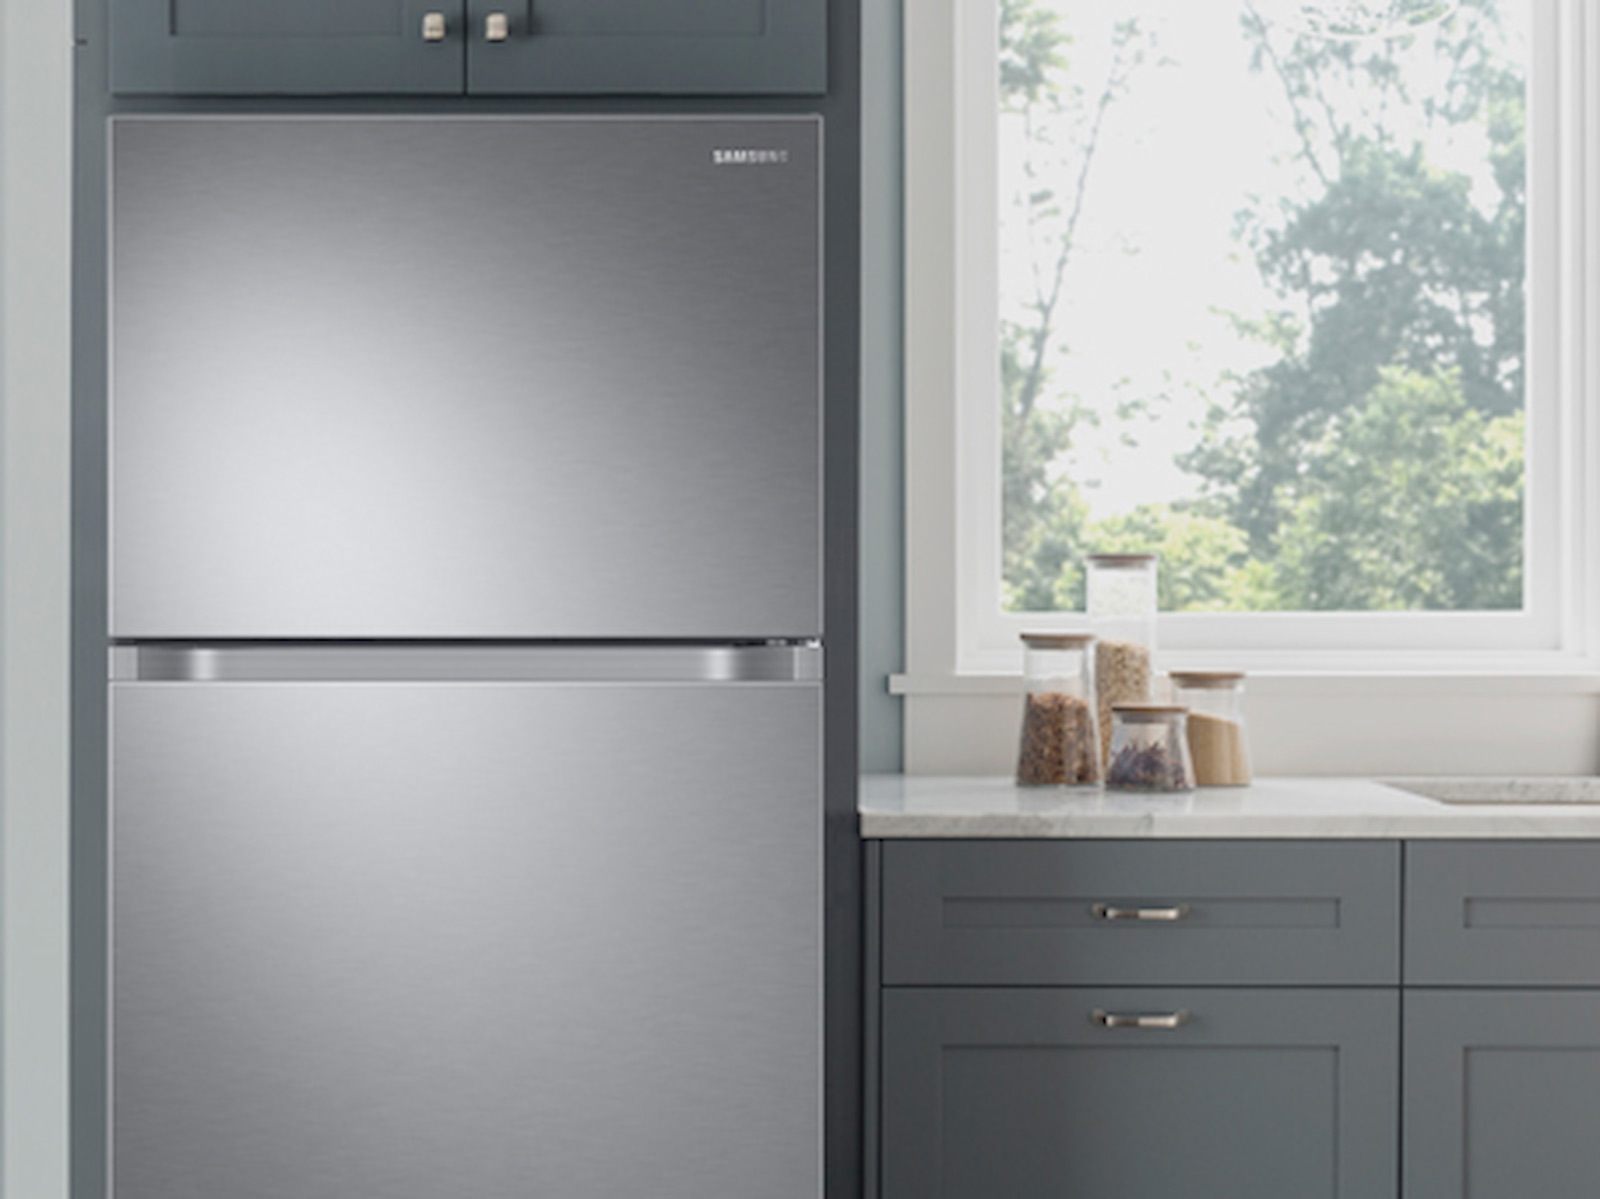 Samsung RT21M6213SR top freezer refrigerator review: Simple, yet